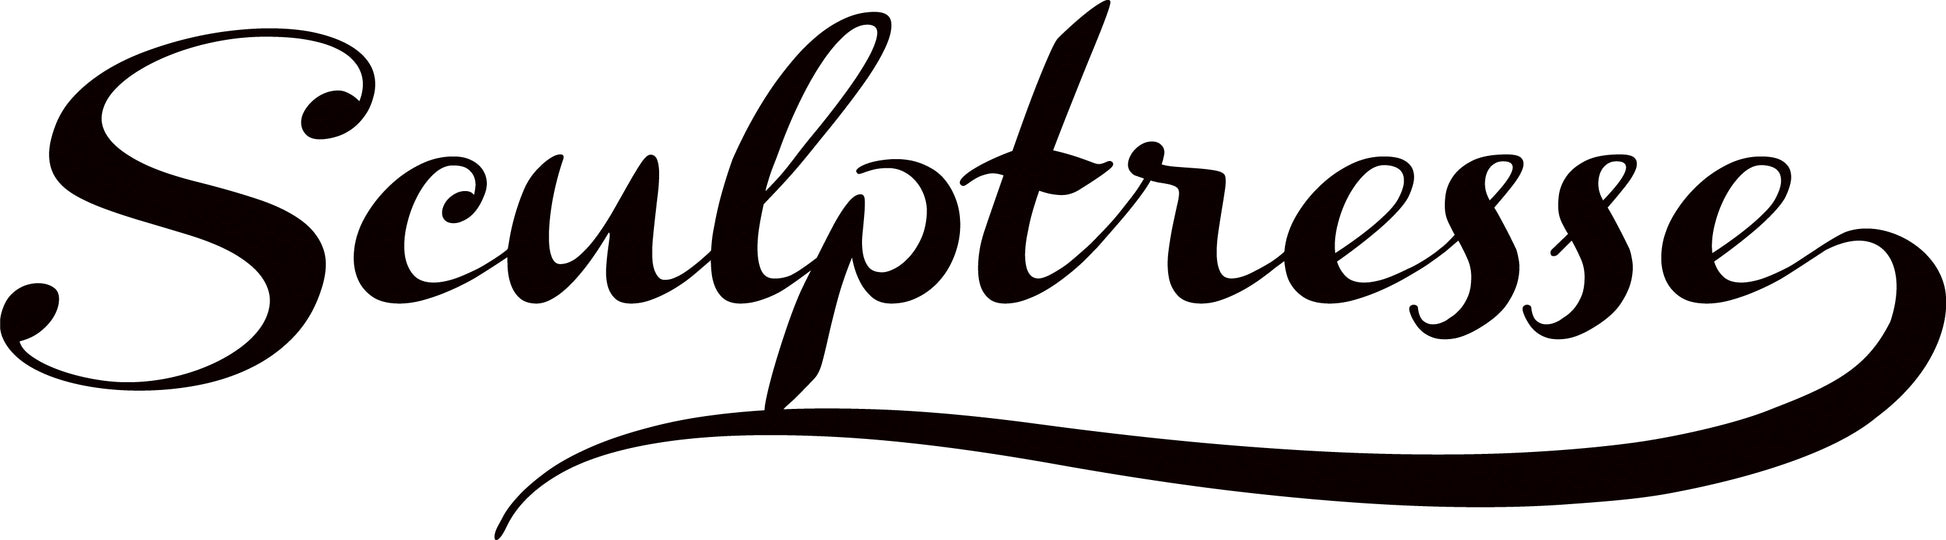 Sculptresse Brand Logo